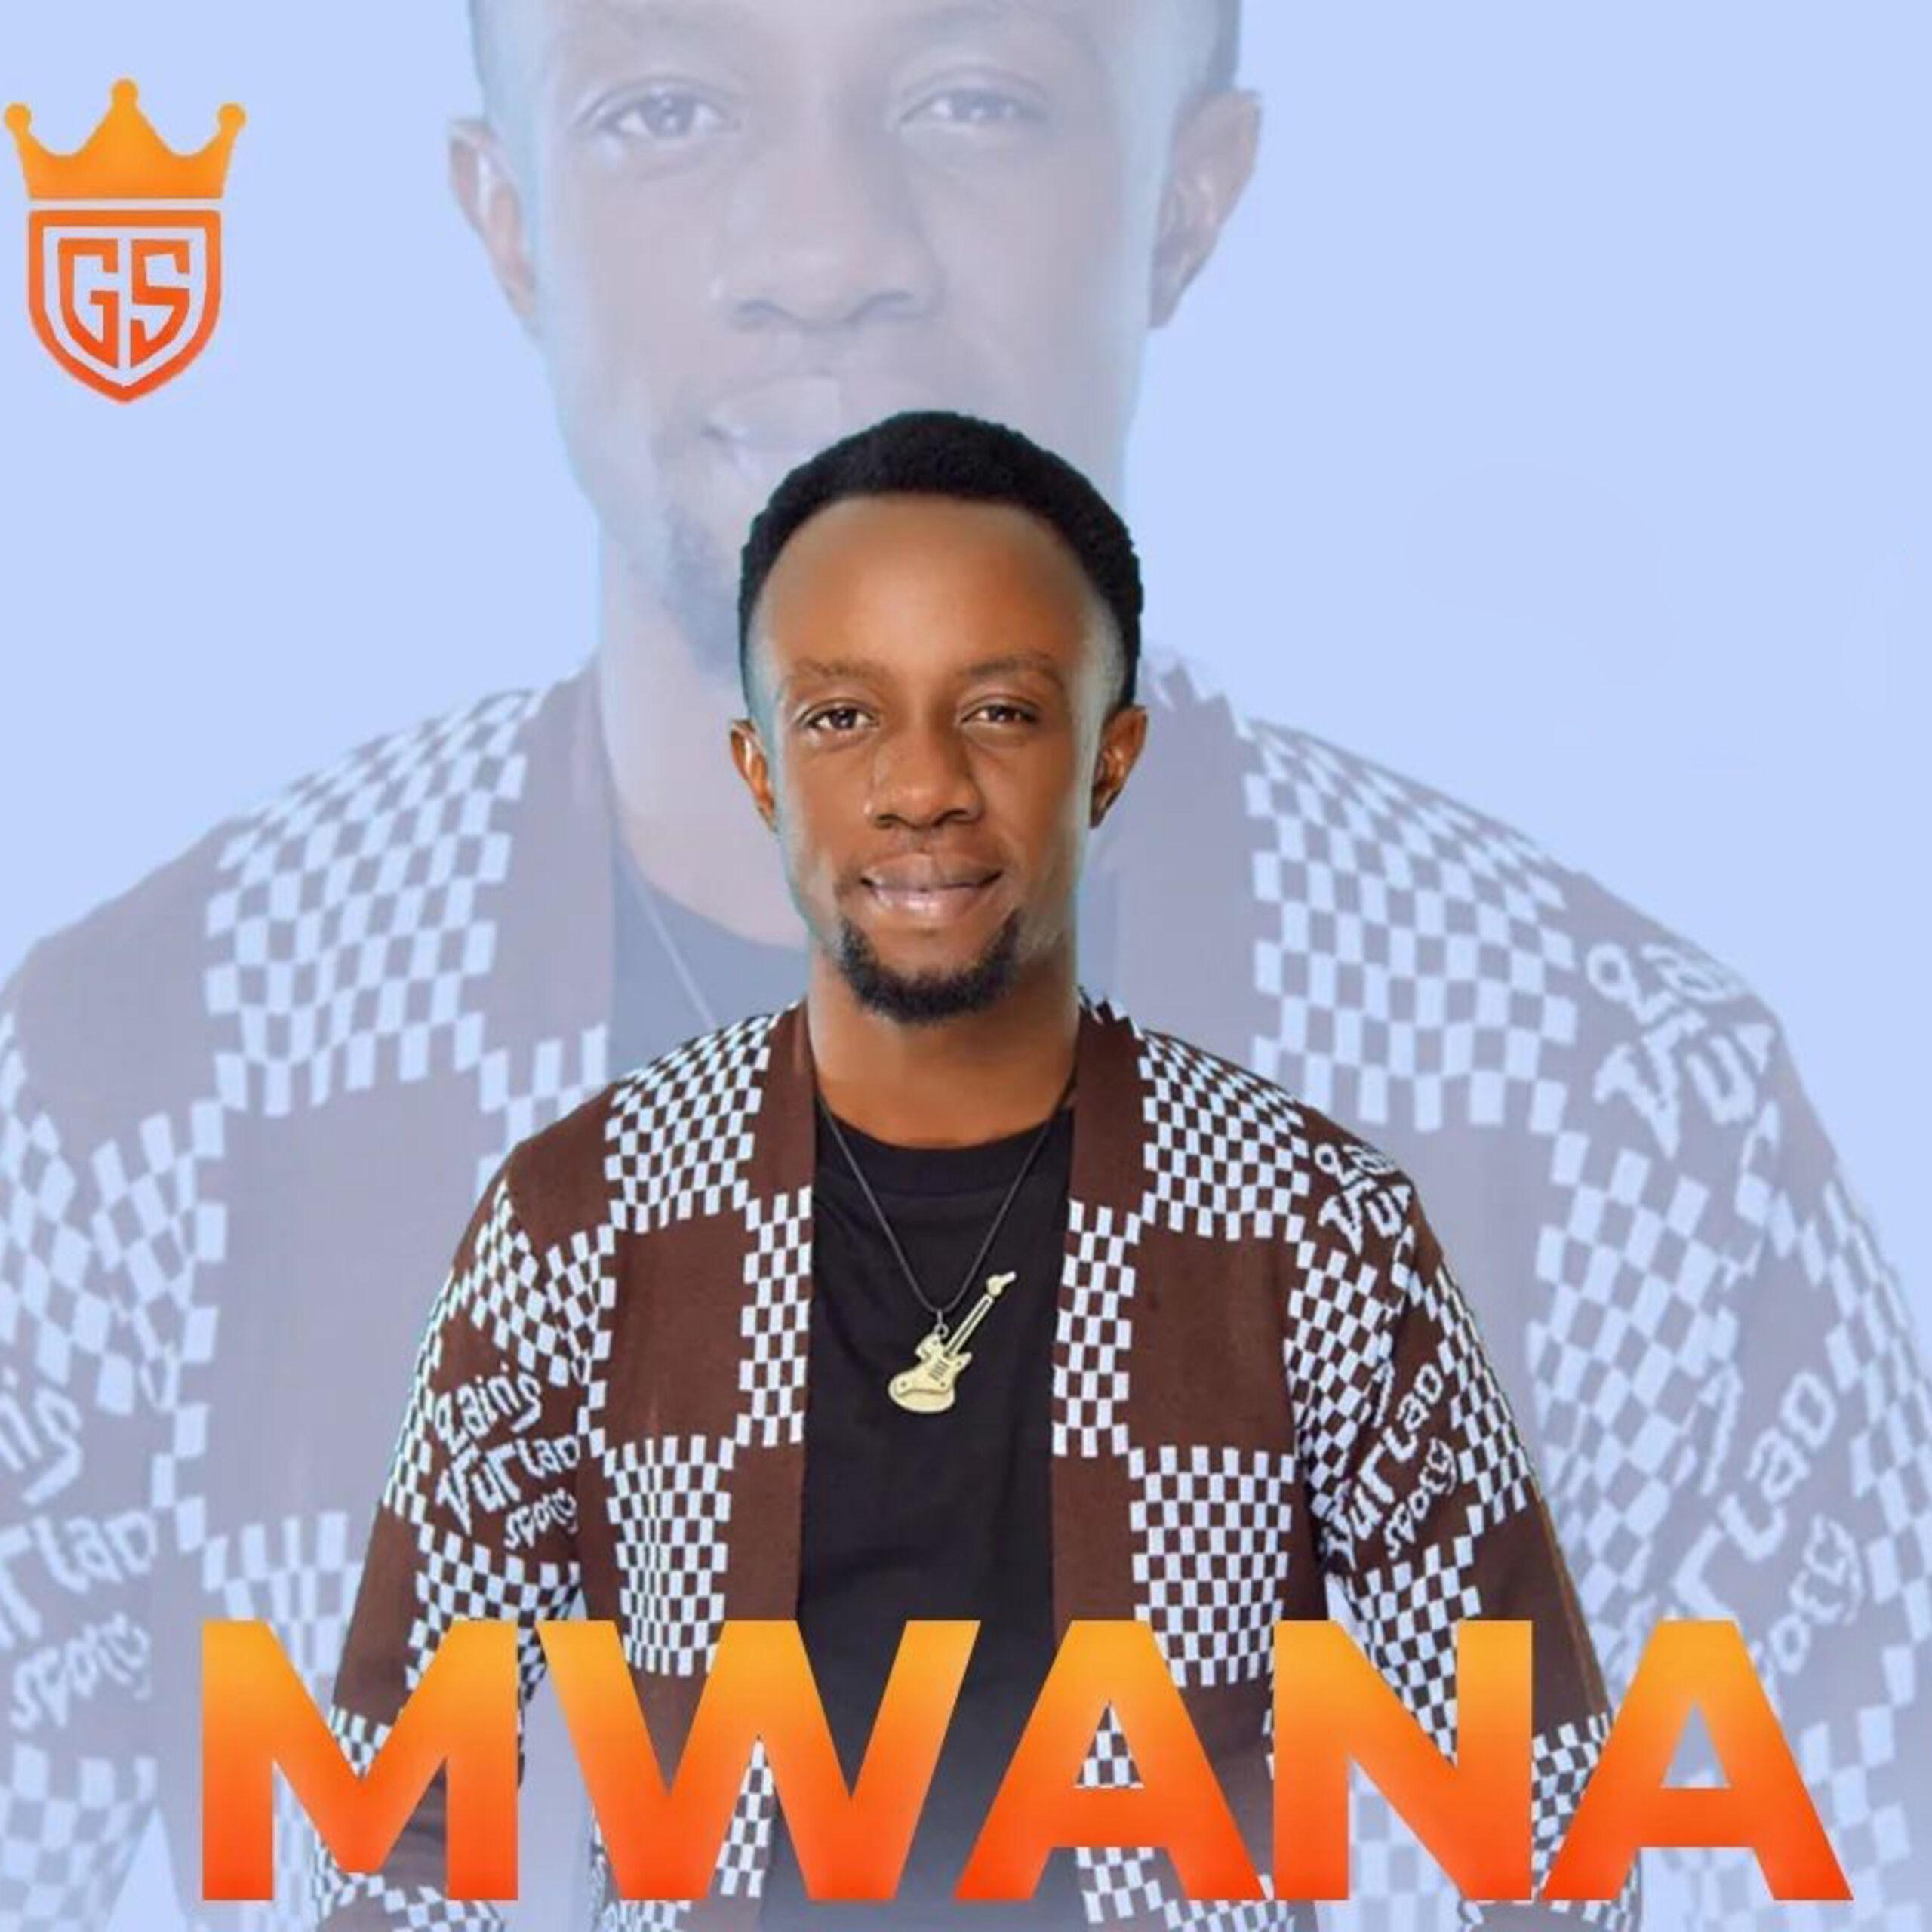 Mwana By Godfrey Steven